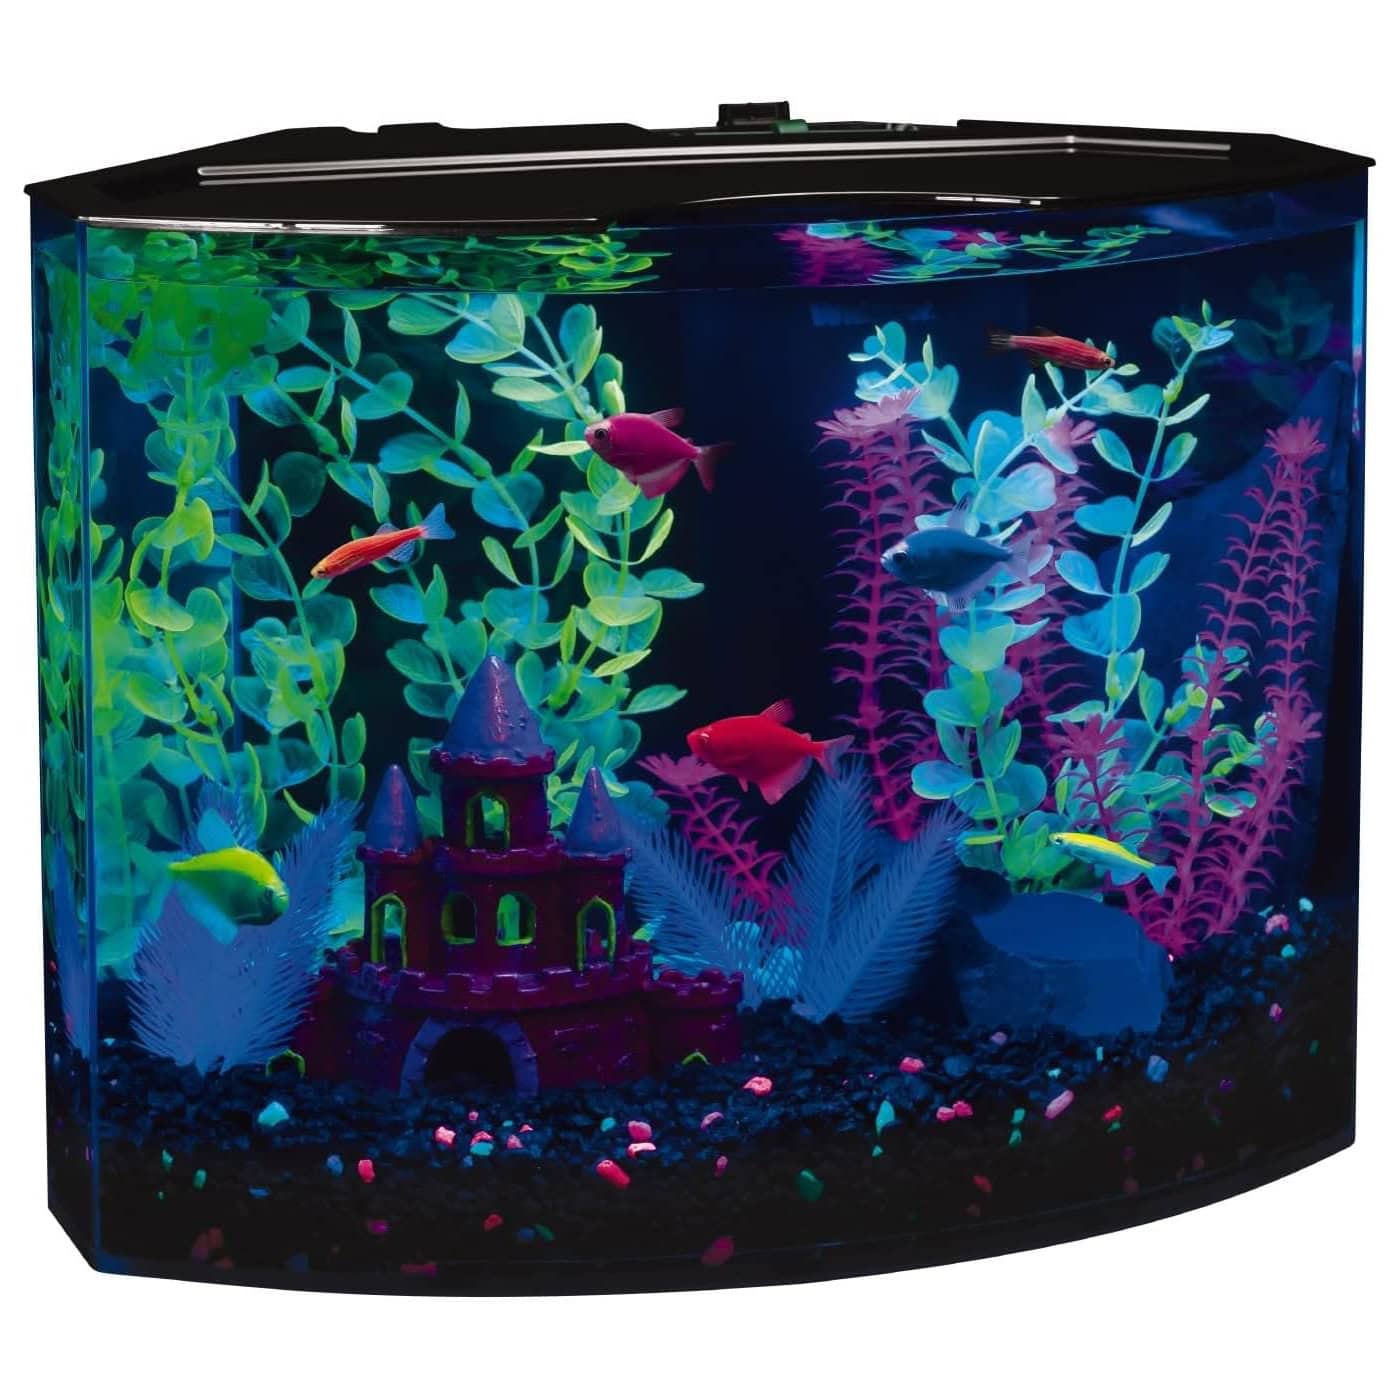 GloFish Aquarium Kit Fish Tank with LED Lighting and Filtration